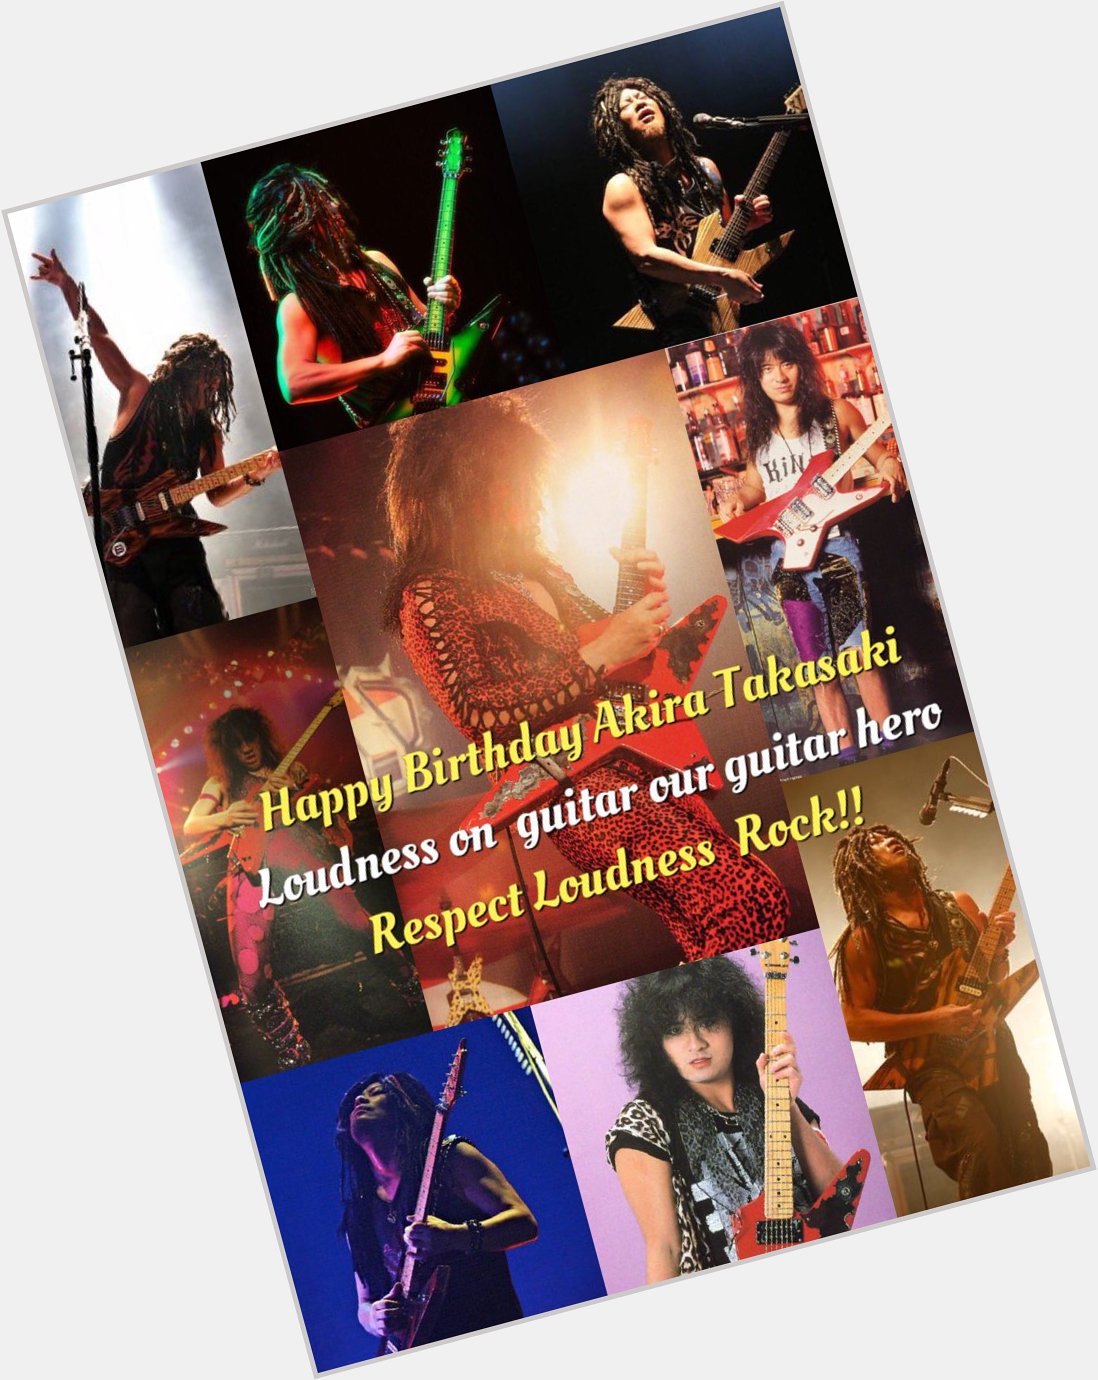 Happy Birthday Akira Takasaki
Loudness on  guitar our guitar hero
Respect Loudness  Rock!! 